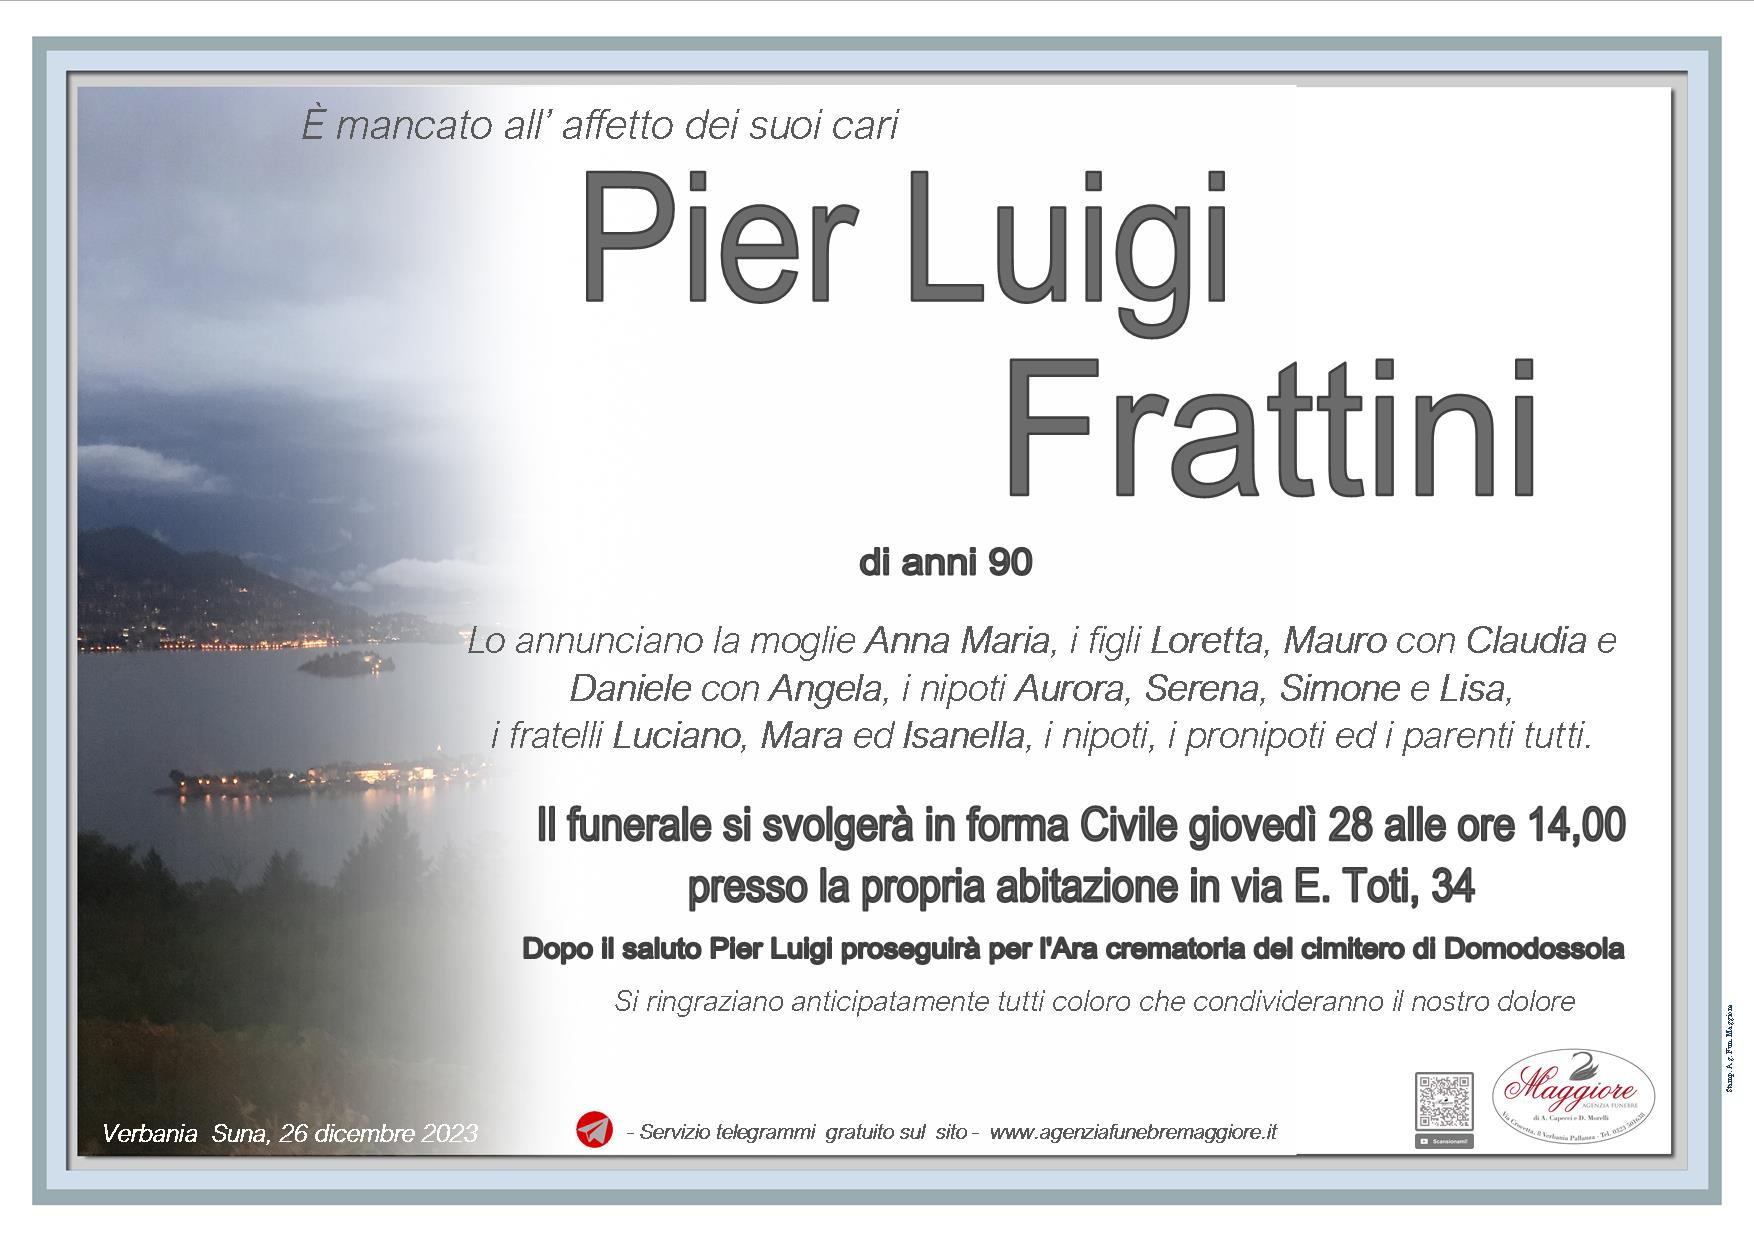 Pier Luigi Frattini